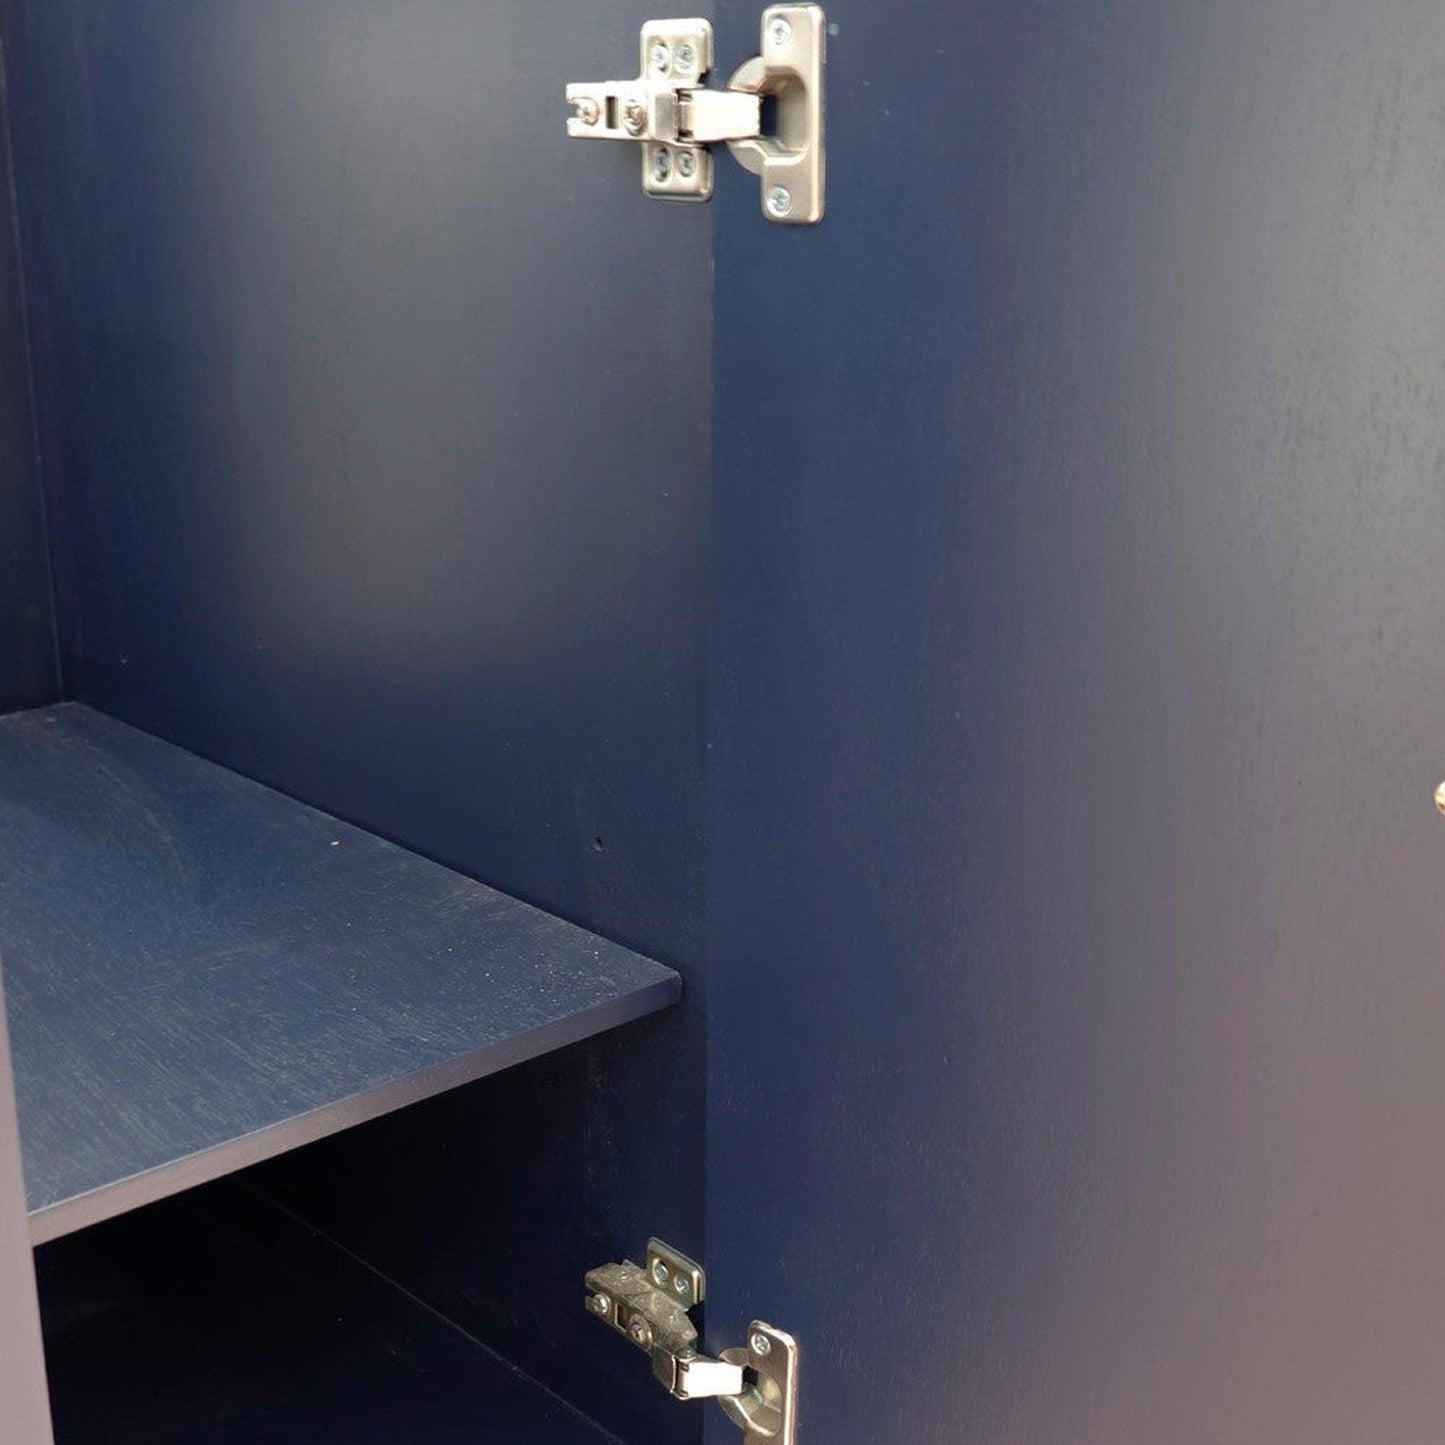 Bellaterra Home Forli 37" 2-Door 3-Drawer Blue Freestanding Vanity Set With Ceramic Left Offset Undermount Oval Sink and White Carrara Marble Top, and Left Door Cabinet